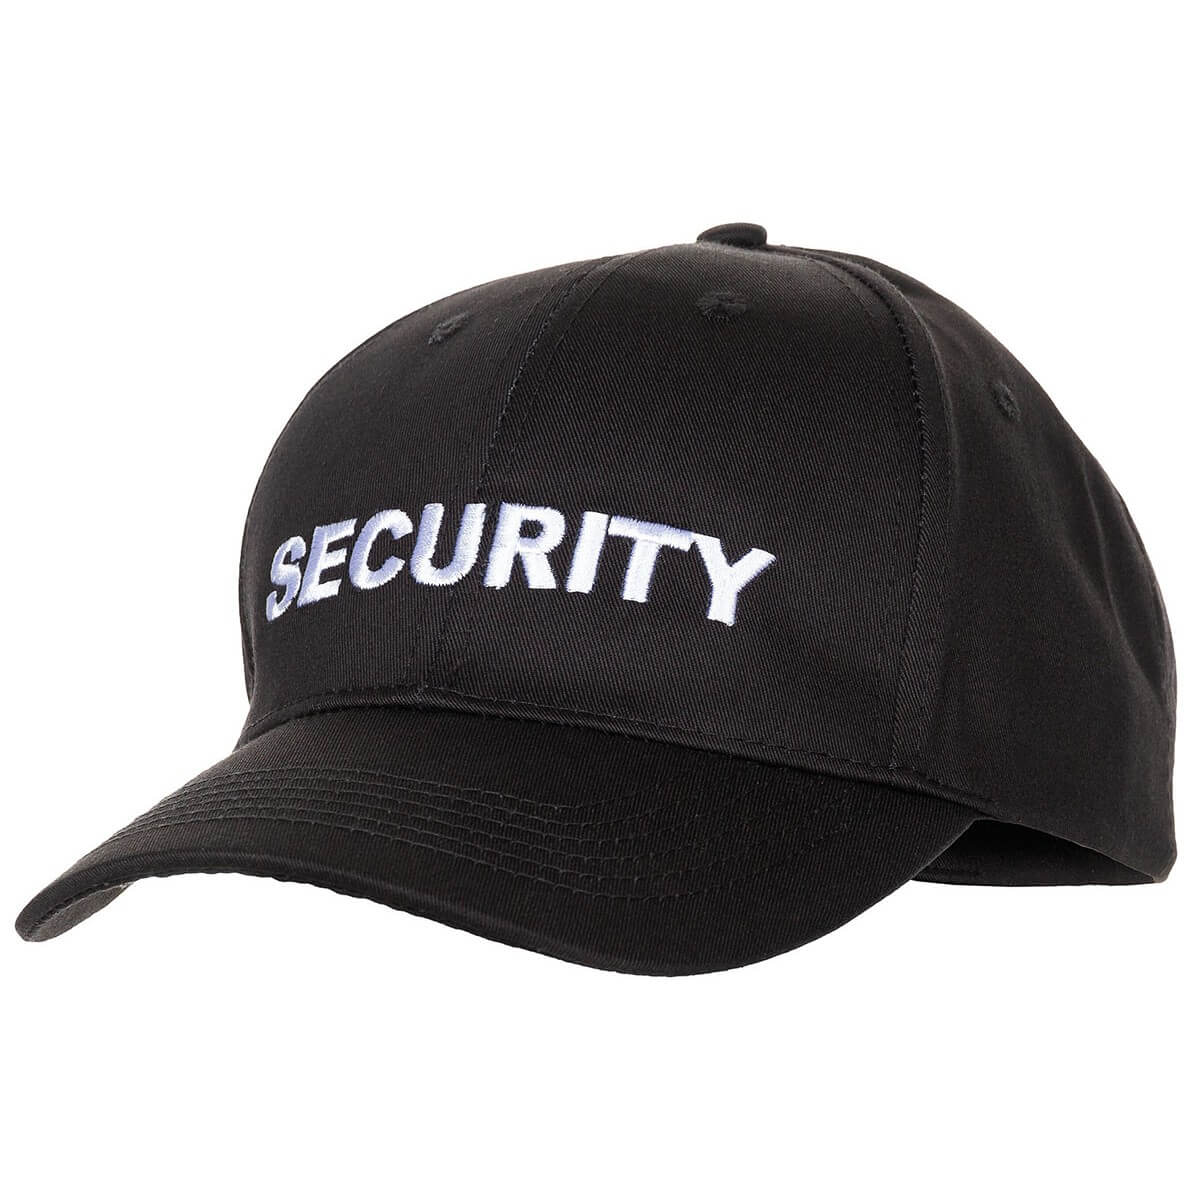 Security Basecap Kappe mit reflextierend Baumwolle Baseball Cap 